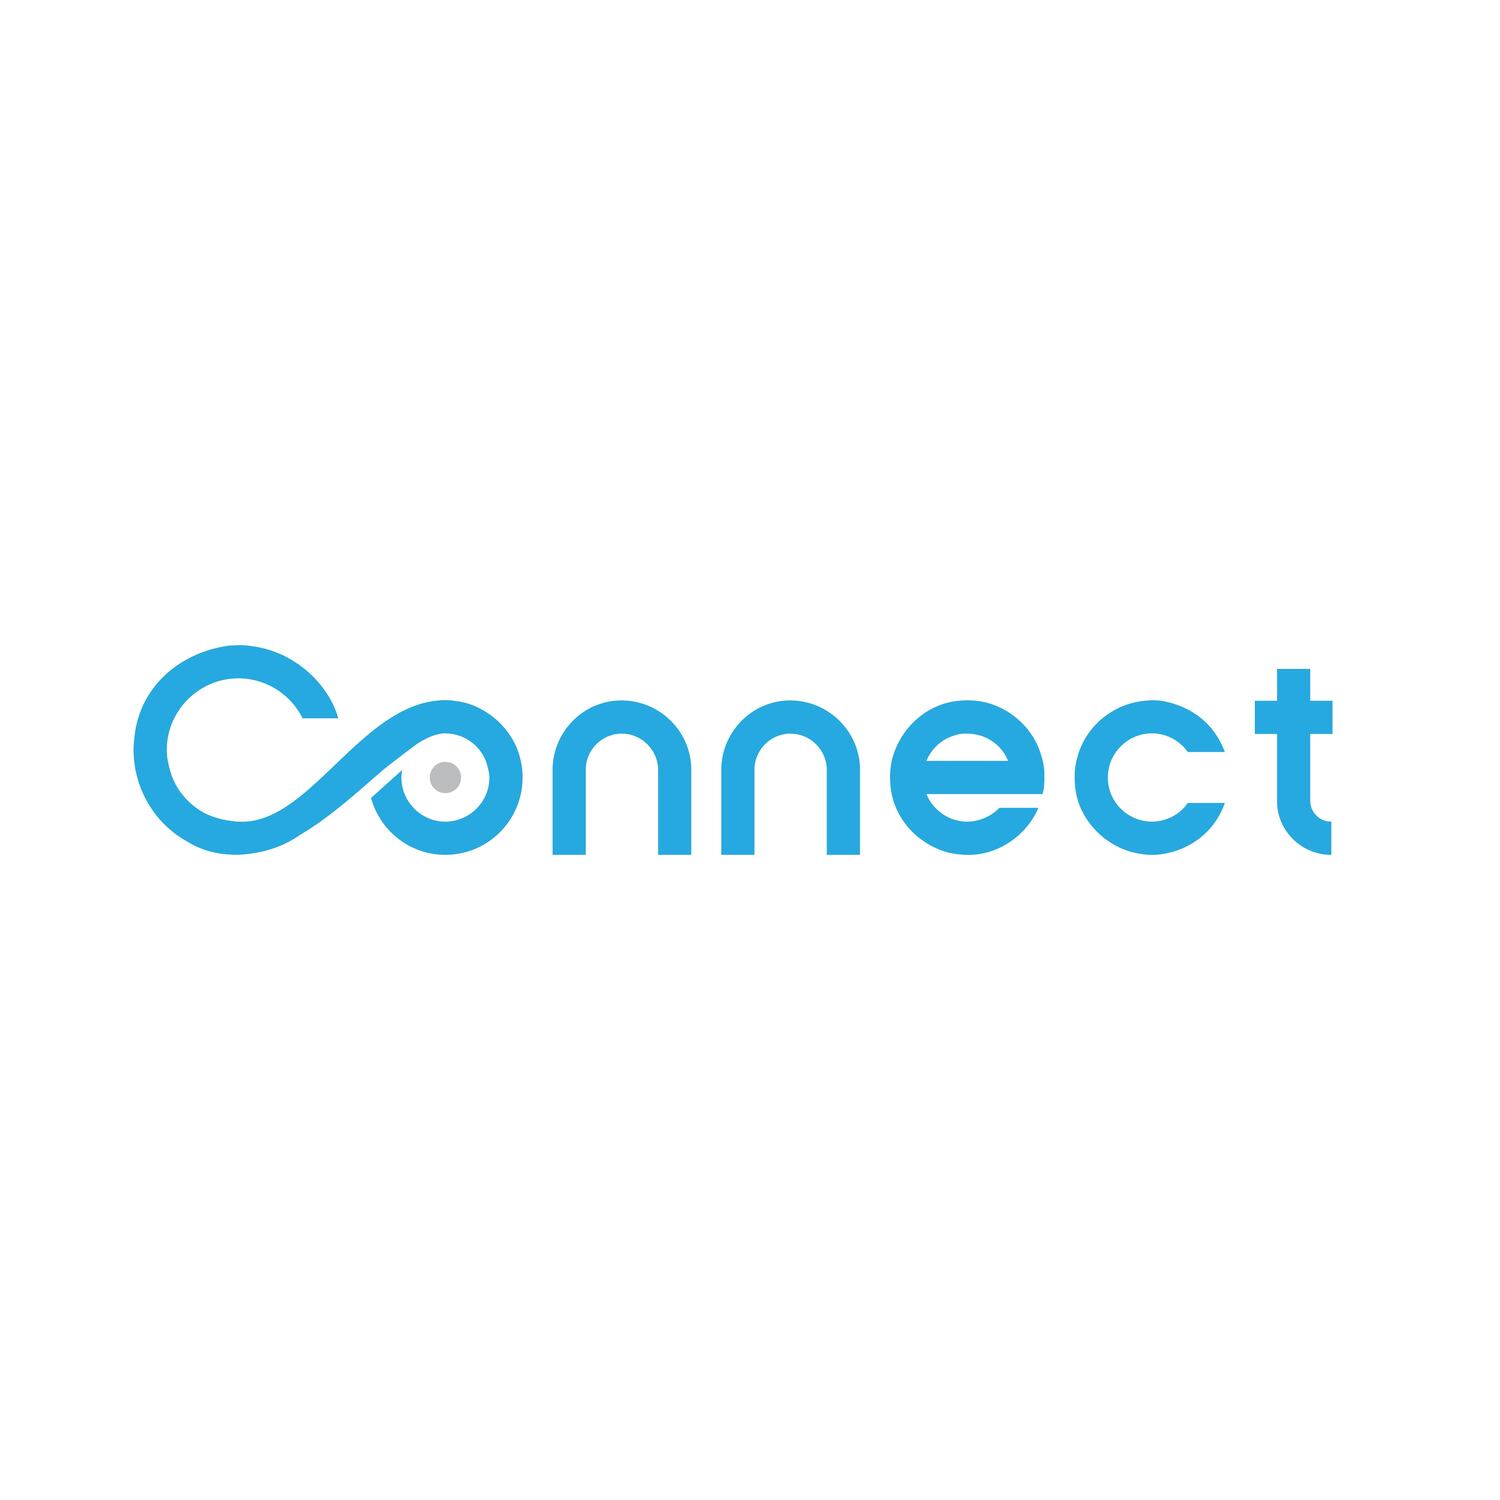 blue connect word logo concept